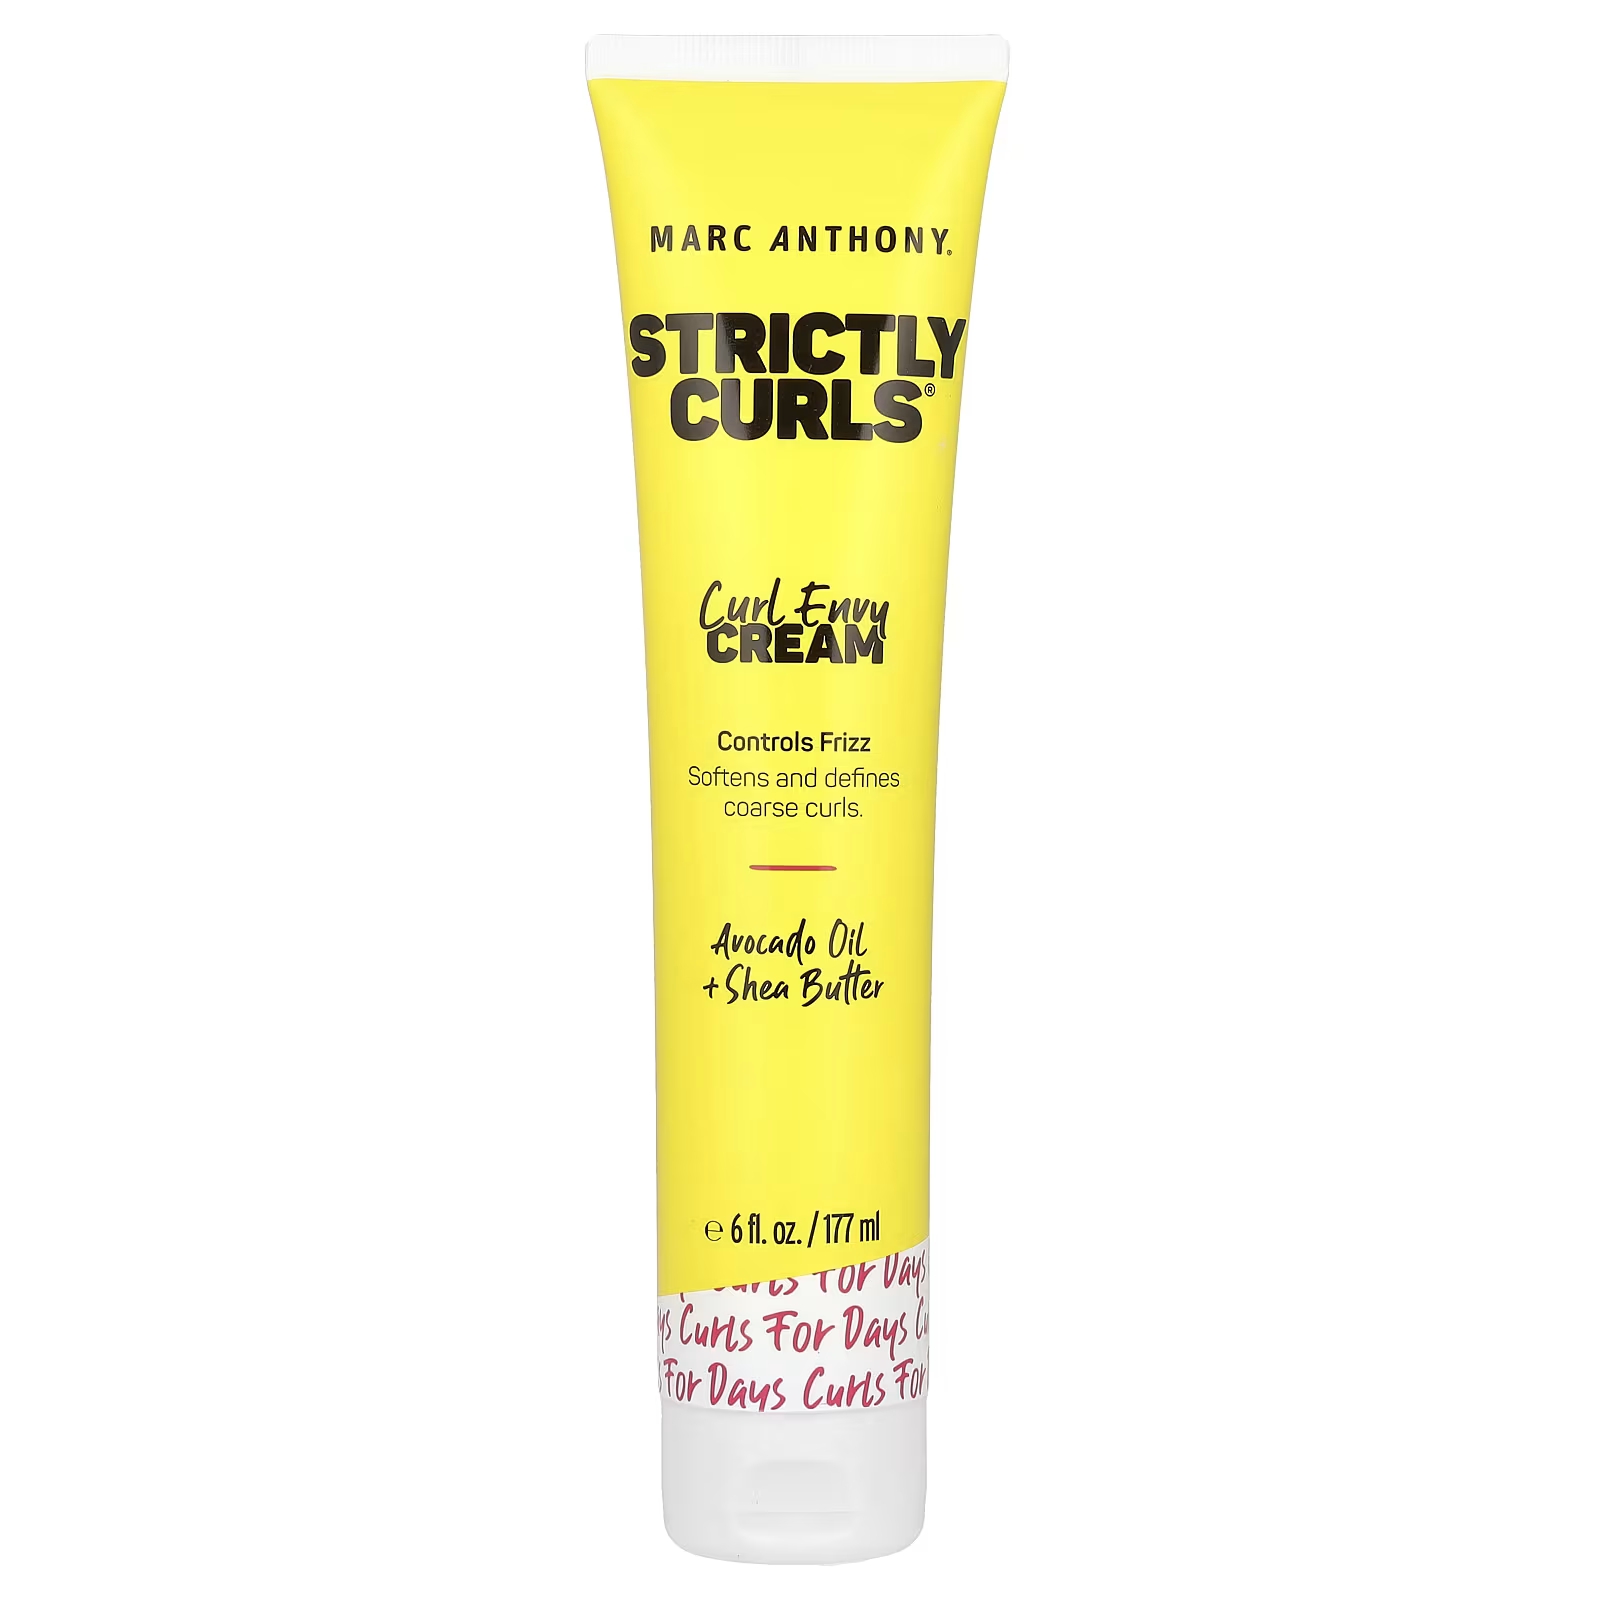 Marc Anthony Strictly Curls Curl Envy Cream, 6 жидких унций (177 мл) цена и фото